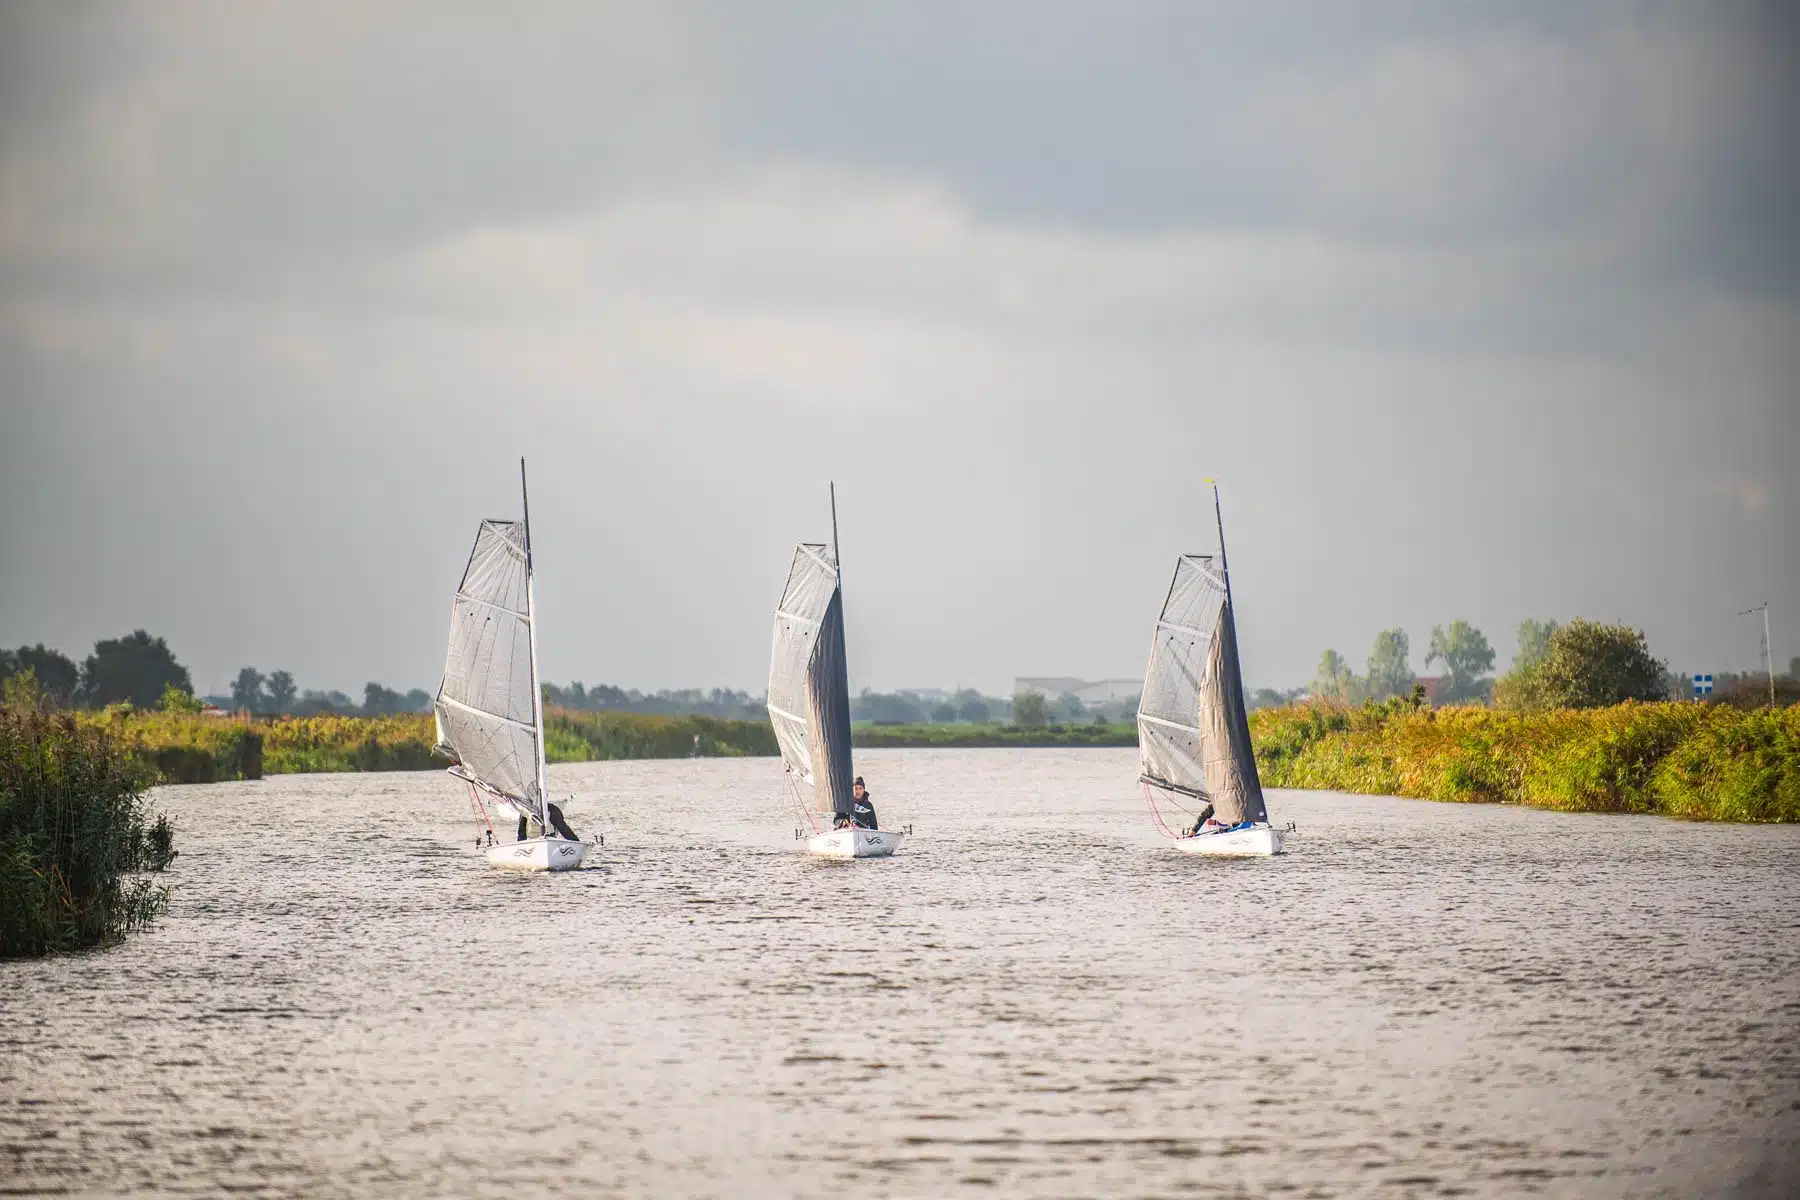 liteboat-xp16-row-sail-boat-netherlands-friesland-4